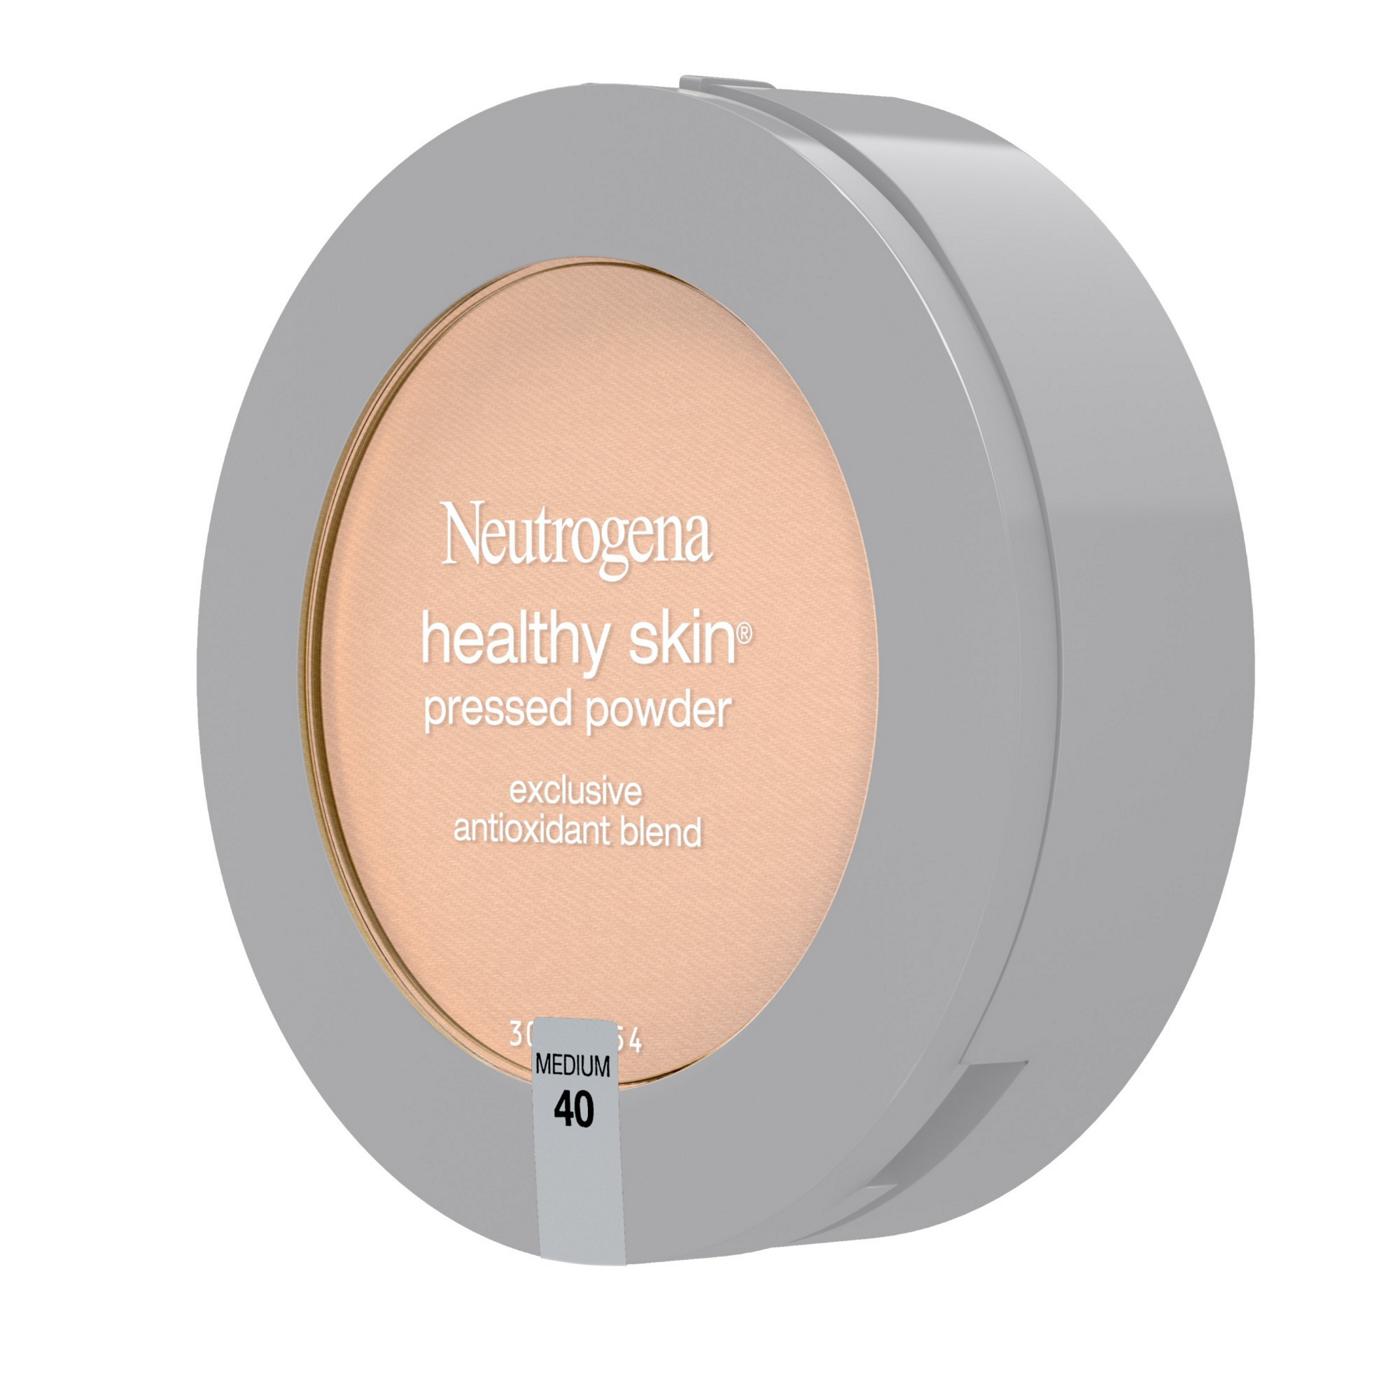 Neutrogena Healthy Skin Pressed Powder 40 Medium; image 2 of 5